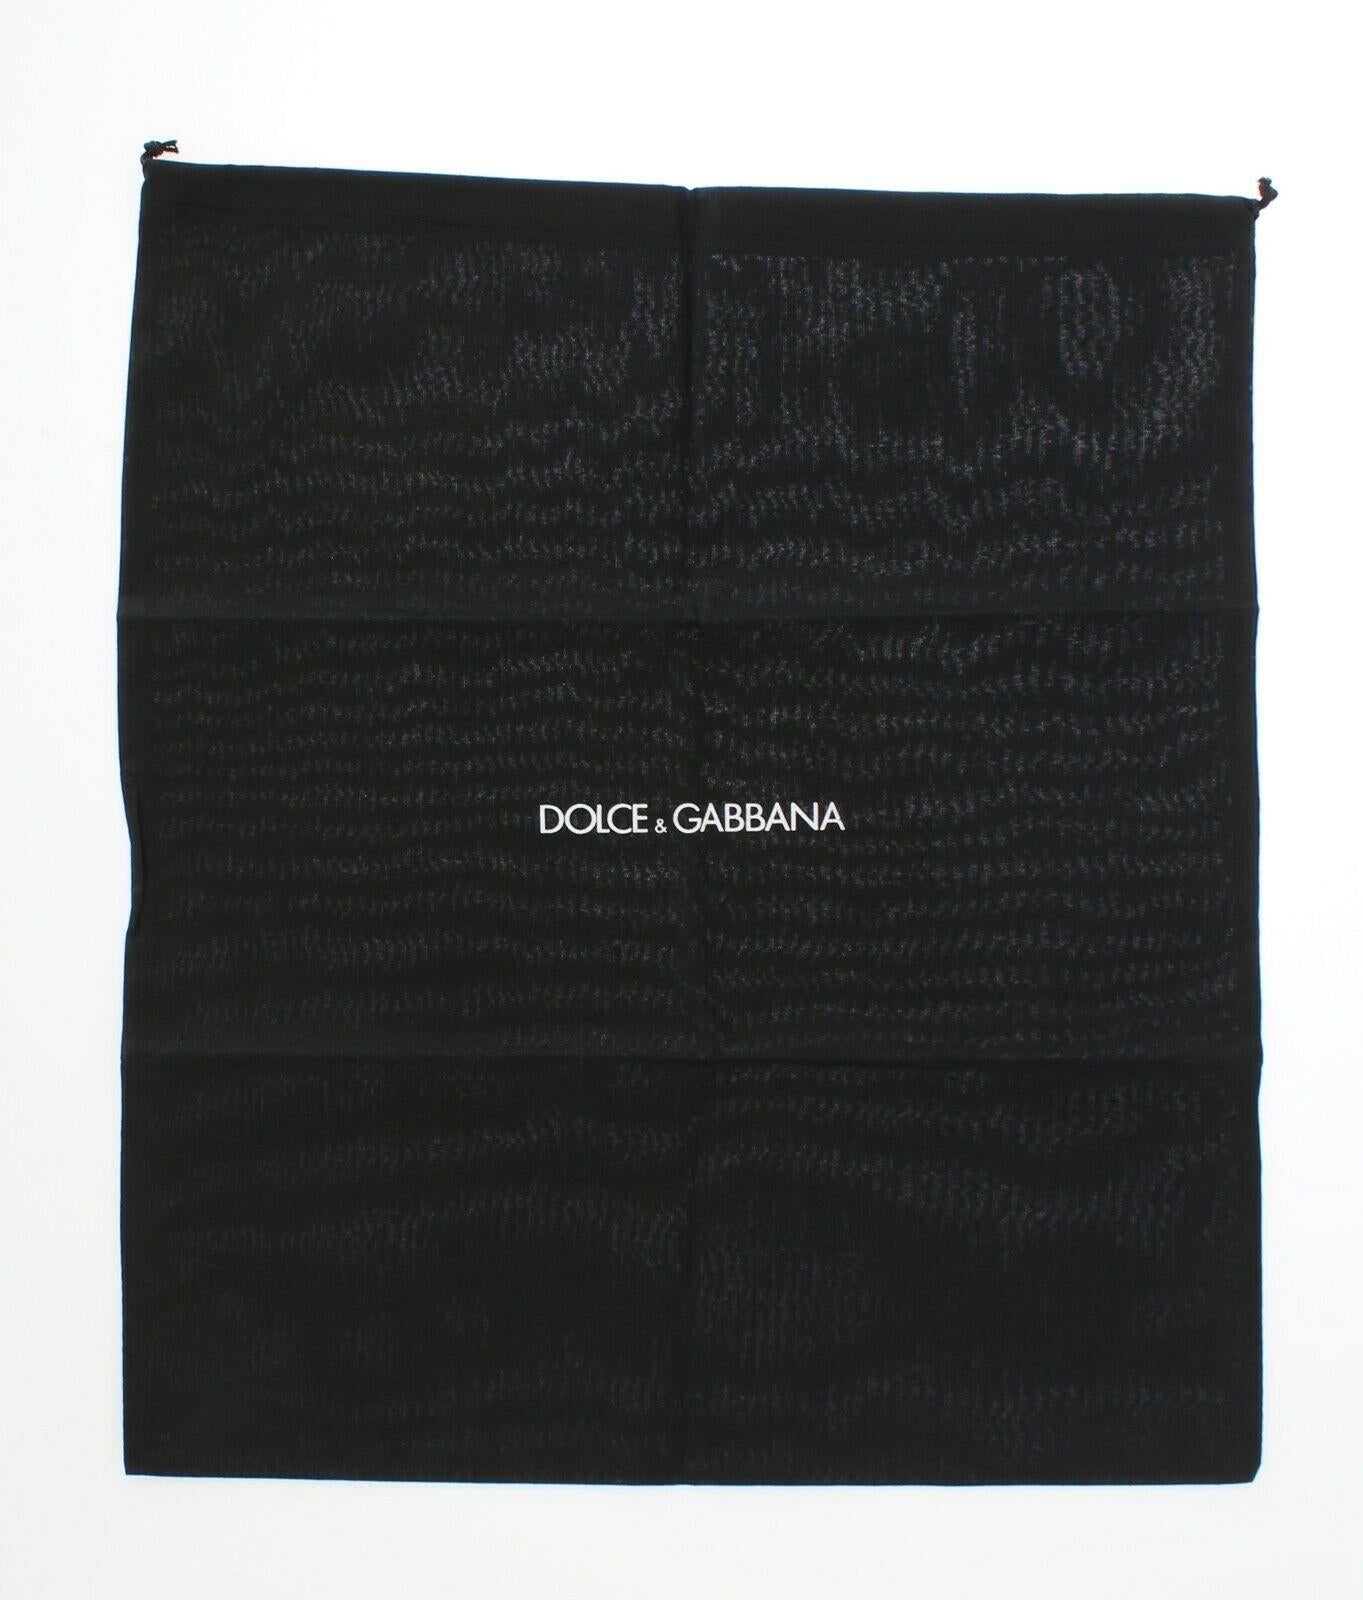 Dolce & Gabbana Devotion Black Yellow Leather Fabric Shoulder Bag Handbag Floral 4